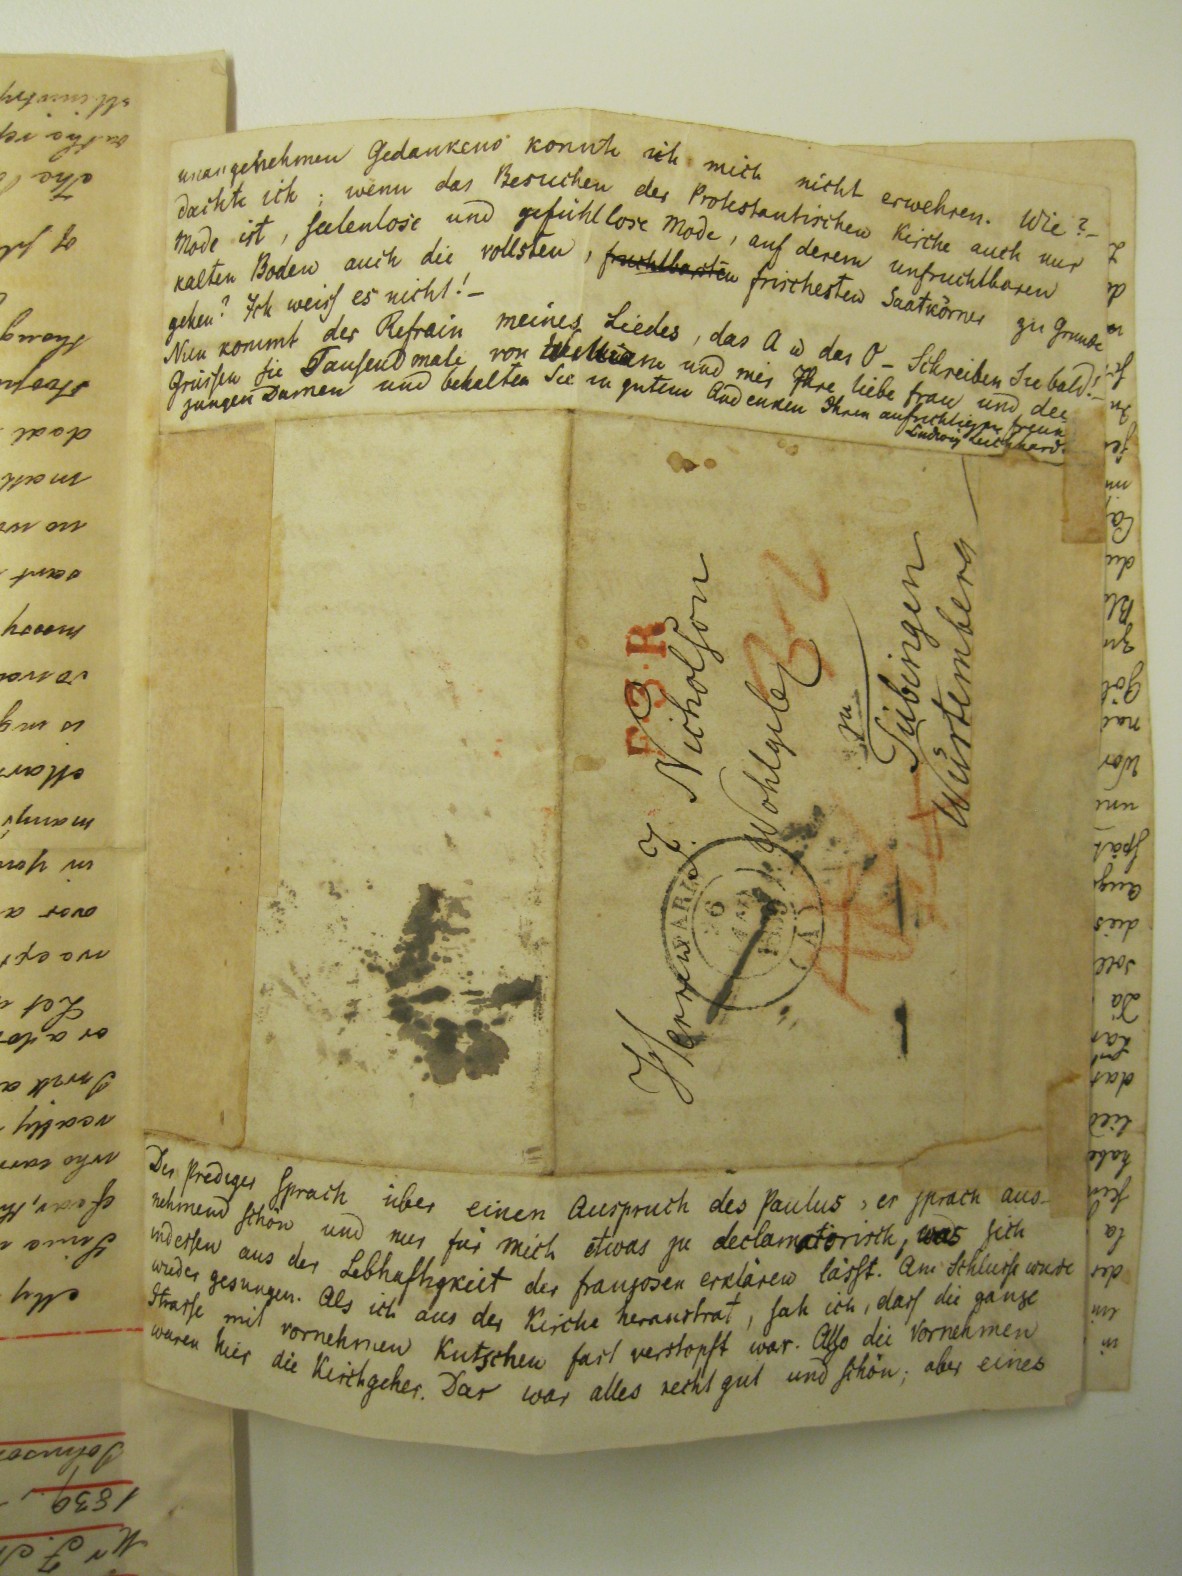 handwritten letter from 1839